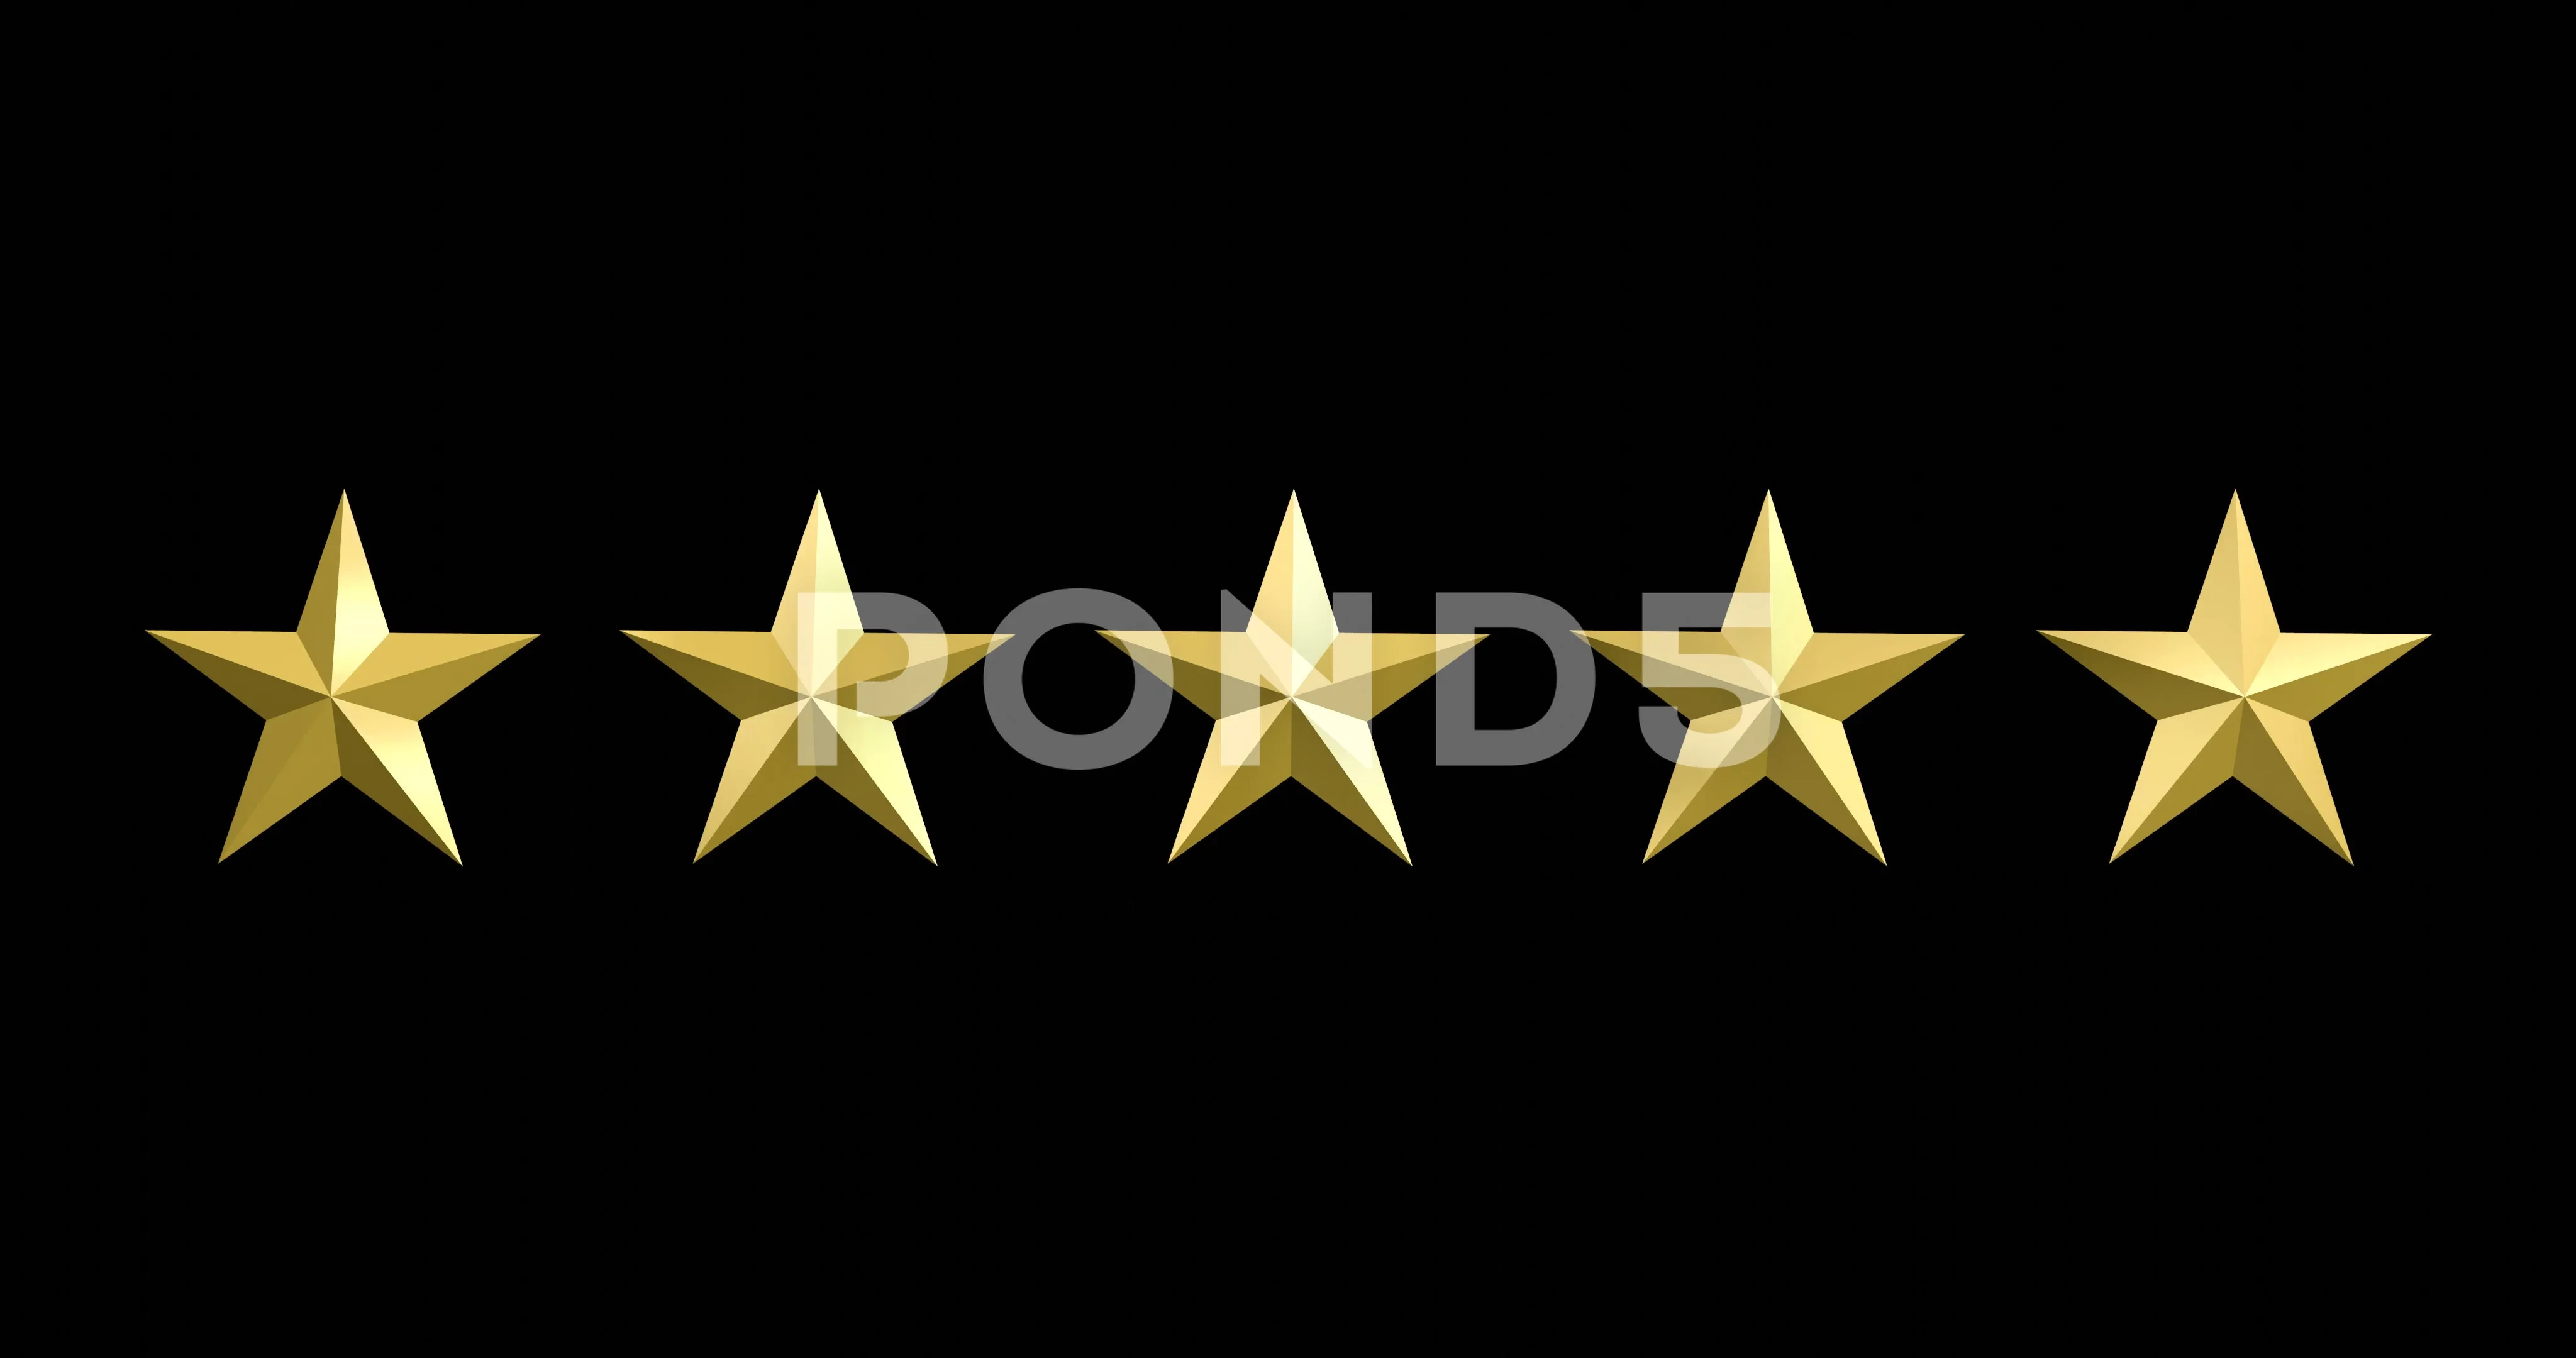 Gold stars. Rating 2 gold stars 4k anima, Stock Video